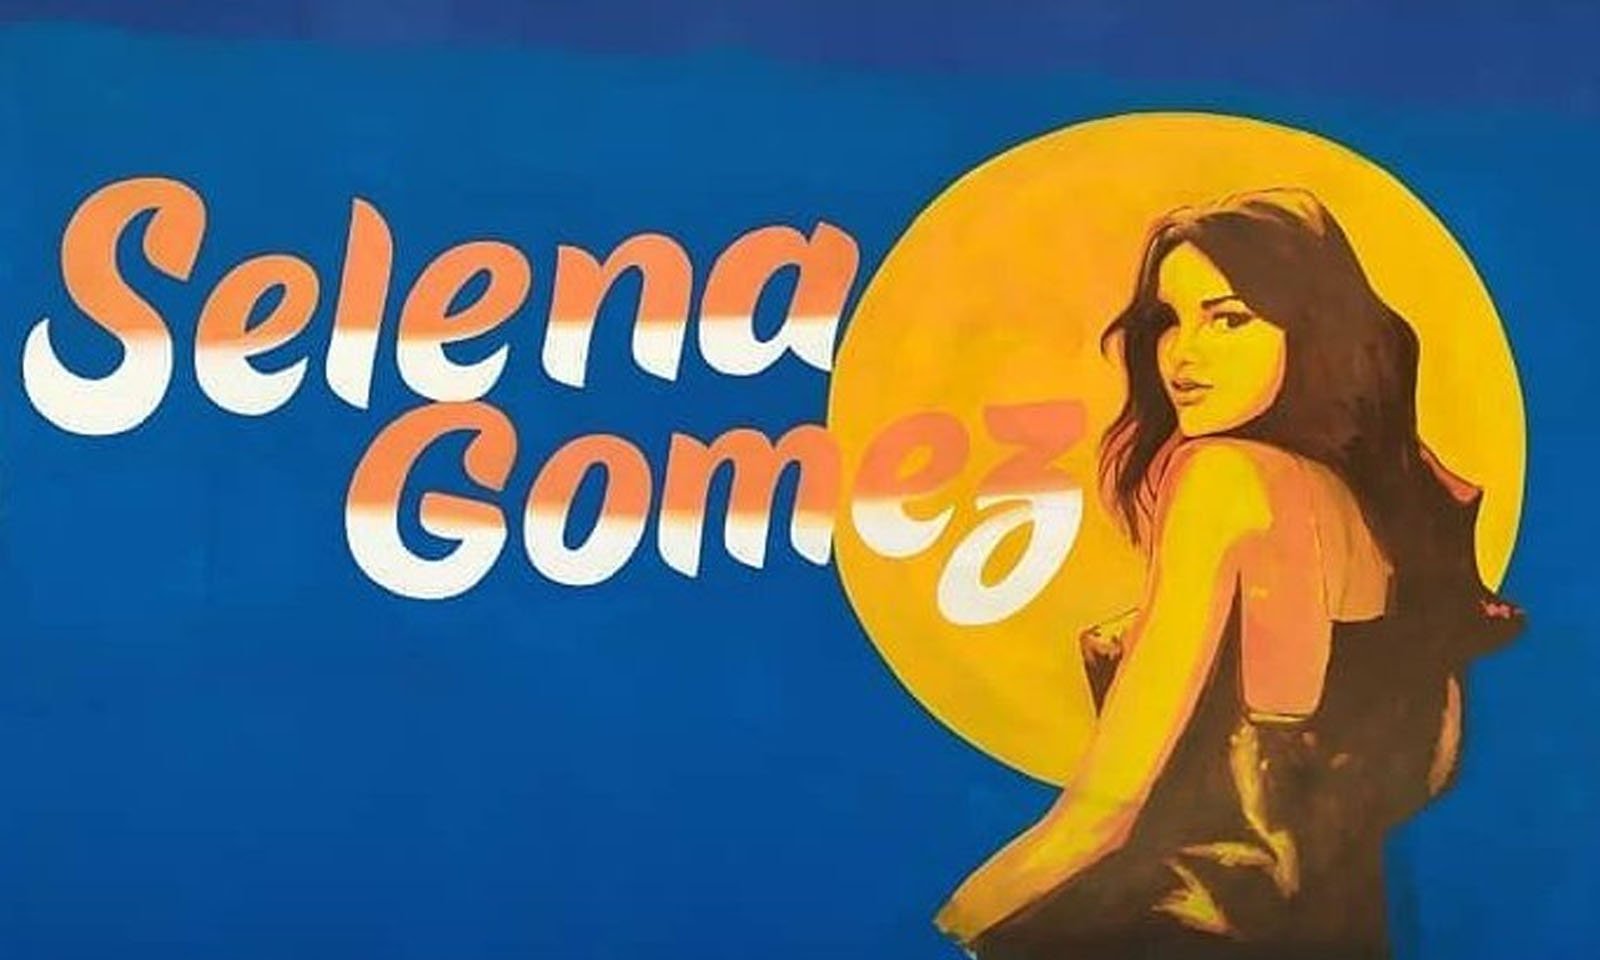 Cena do novo clipe de Selena Gomez gravado no Brasil vaza na web